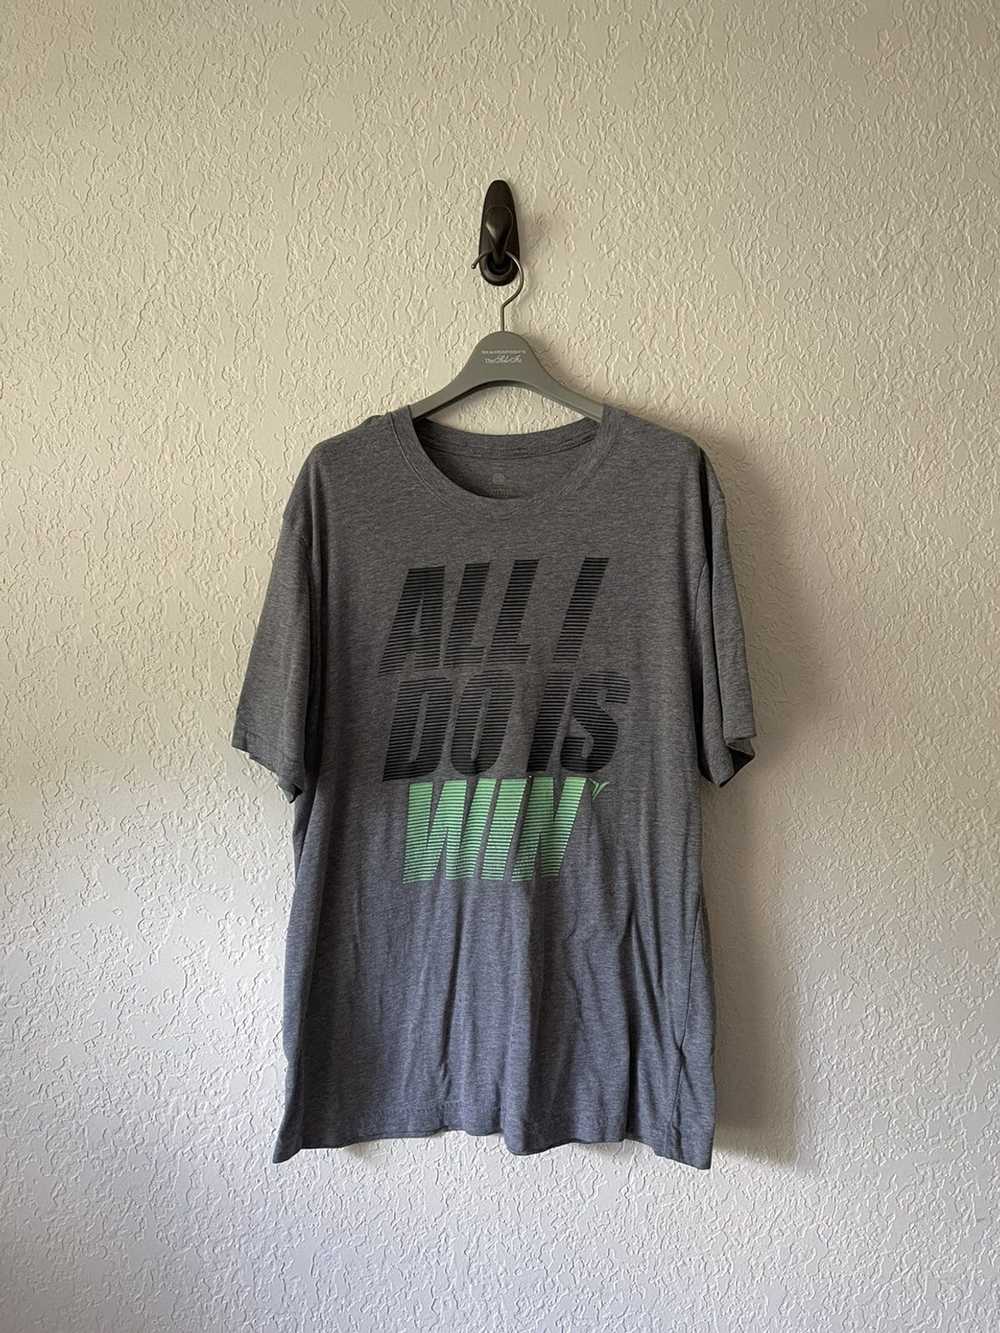 Nike Nike "All I Do Is Win" T-Shirt - image 1